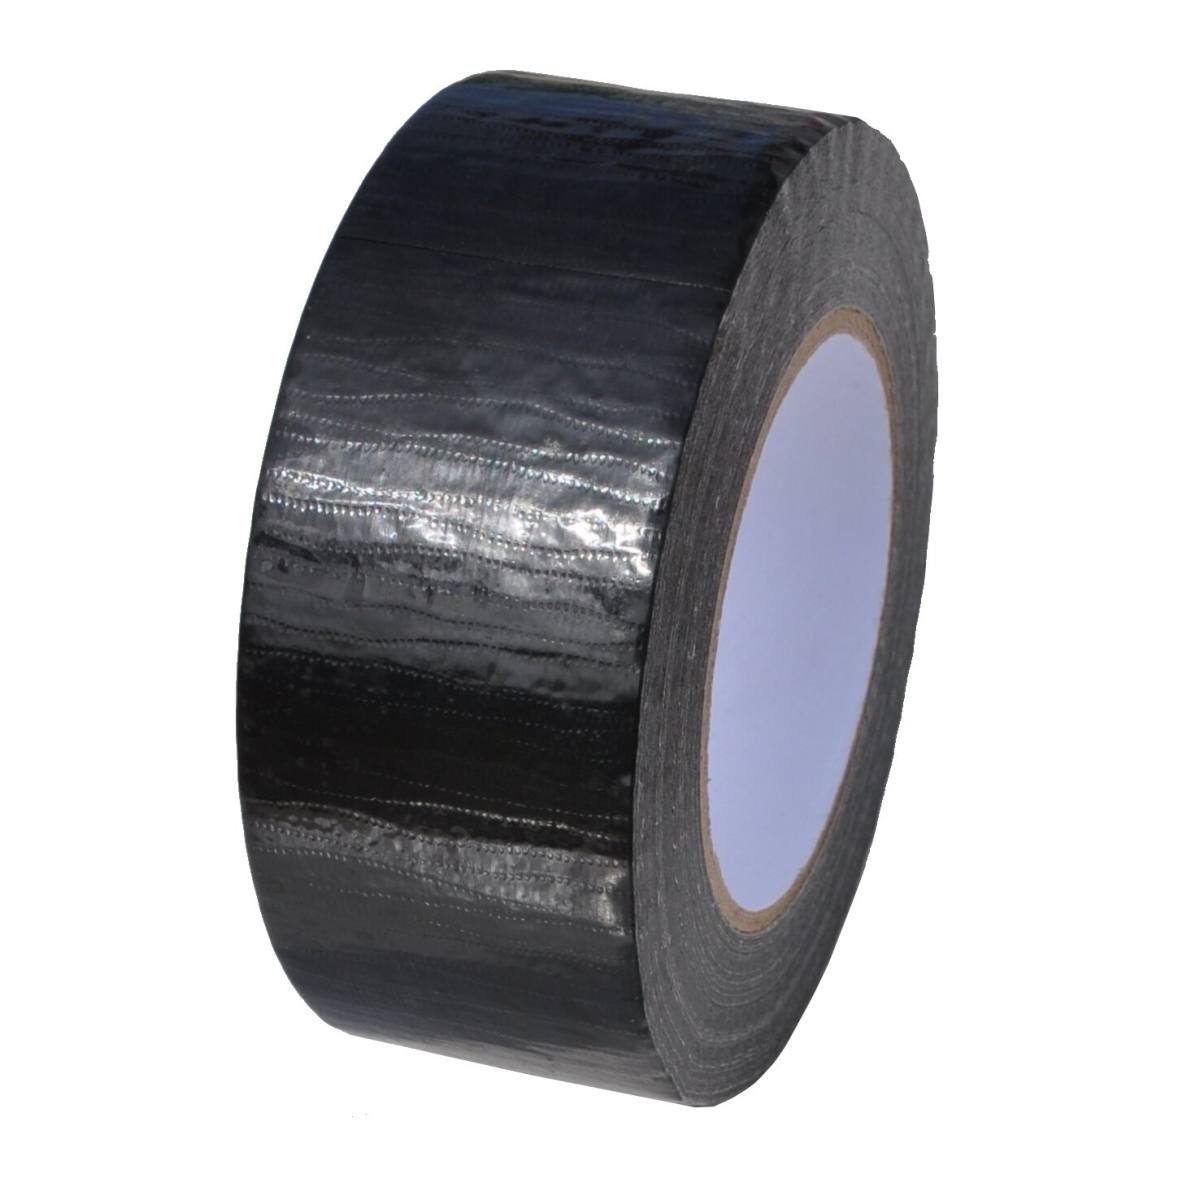 S-K-S 980 fabric tape 50mmx50m black